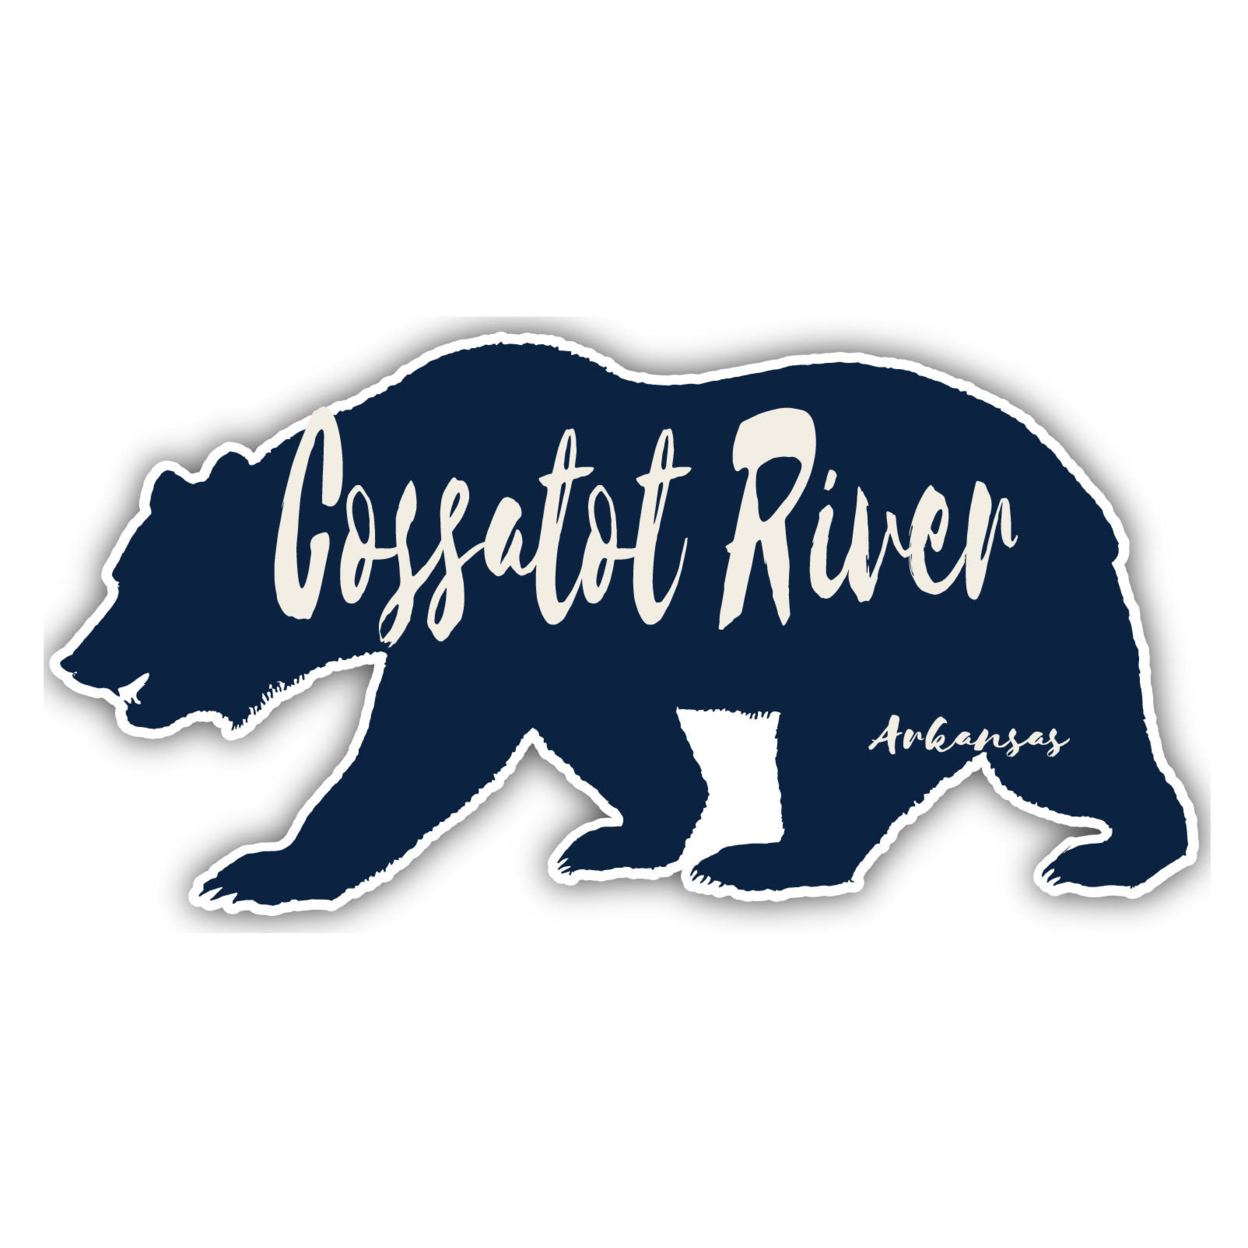 Cossatot River Arkansas Souvenir Decorative Stickers (Choose Theme And Size) - Single Unit, 12-Inch, Great Outdoors